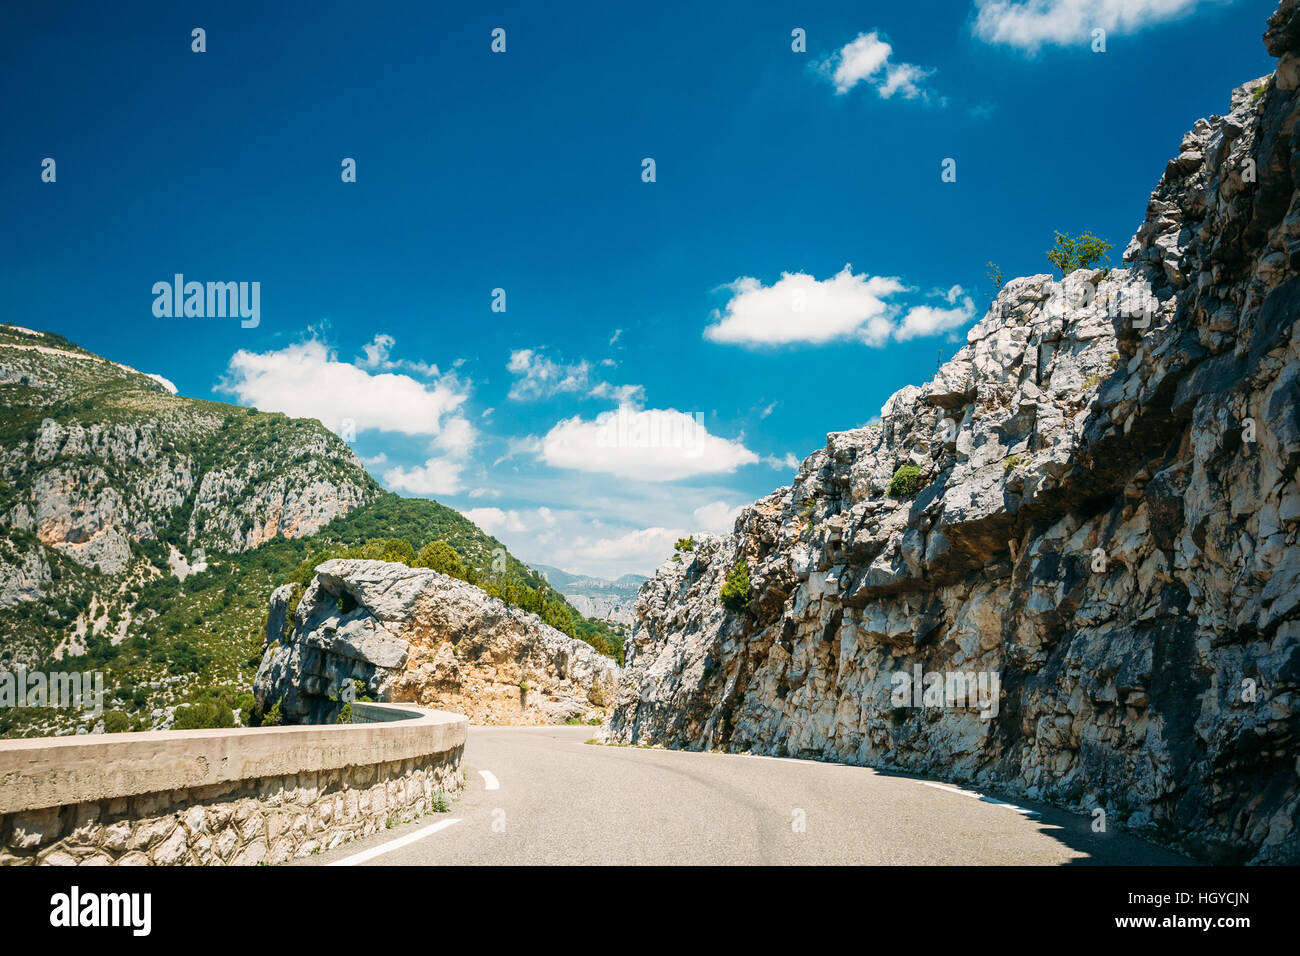 Beautiful Asphalt Mountain Road Under Sunny Blue Sky. Verdon Gorge In France. French Landscape Stock Photo